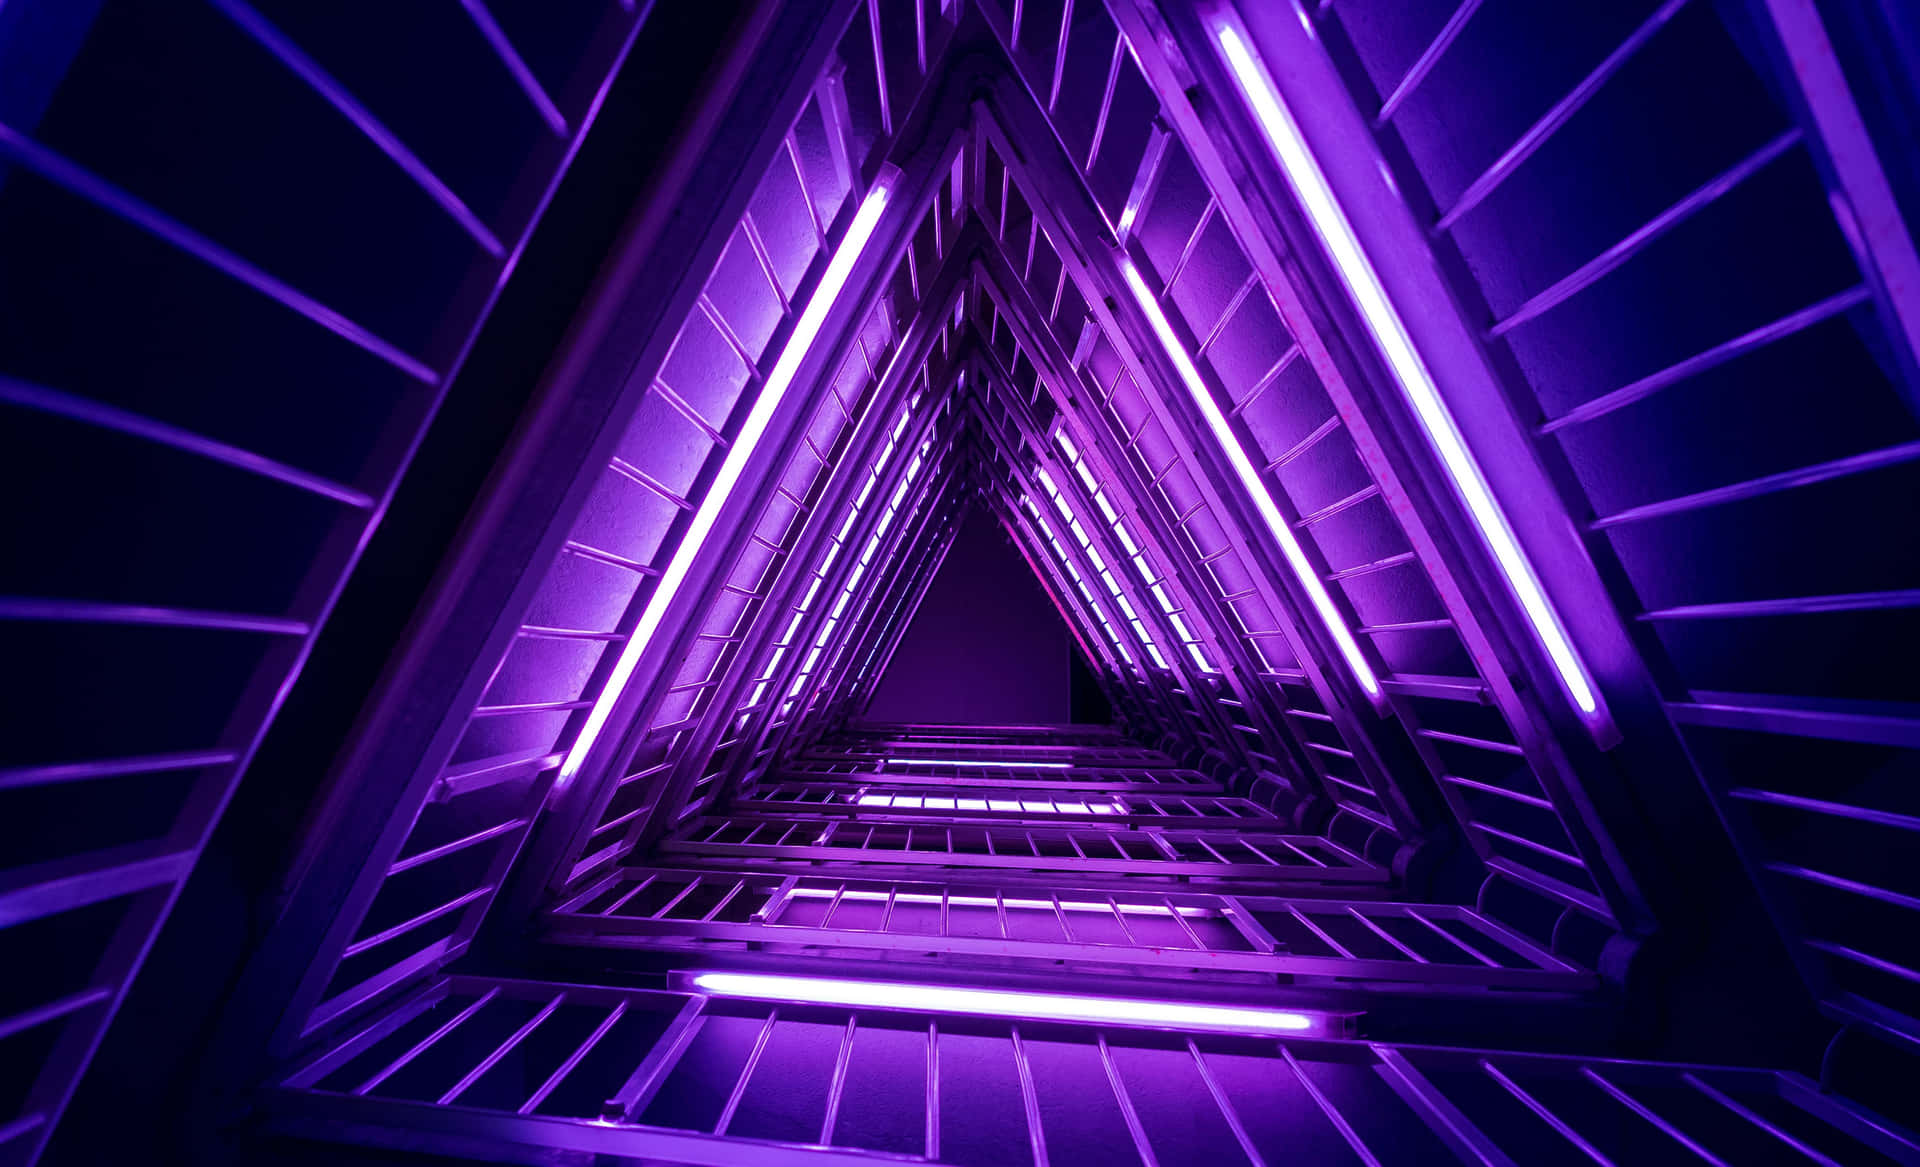 Neon Triangle Architecture Perspective.jpg Wallpaper